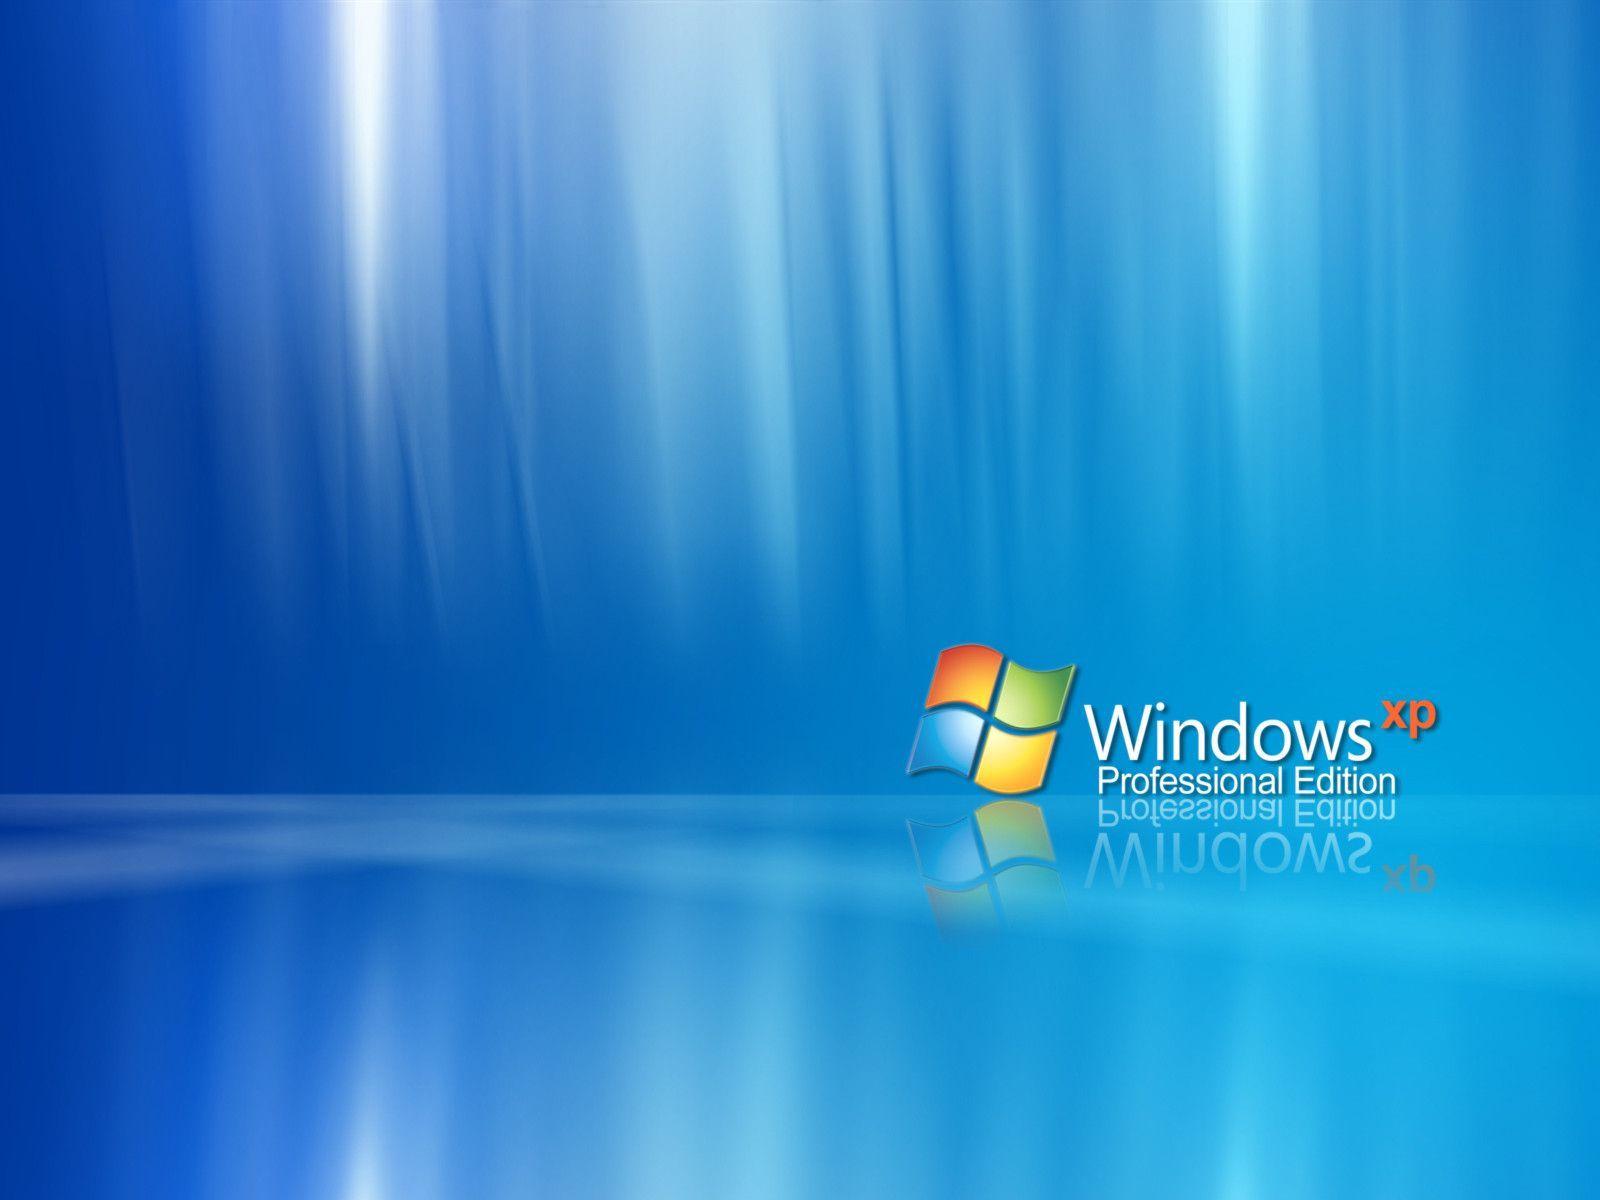 Windows XP Wallpaper. Free Software. Free IDM Forever